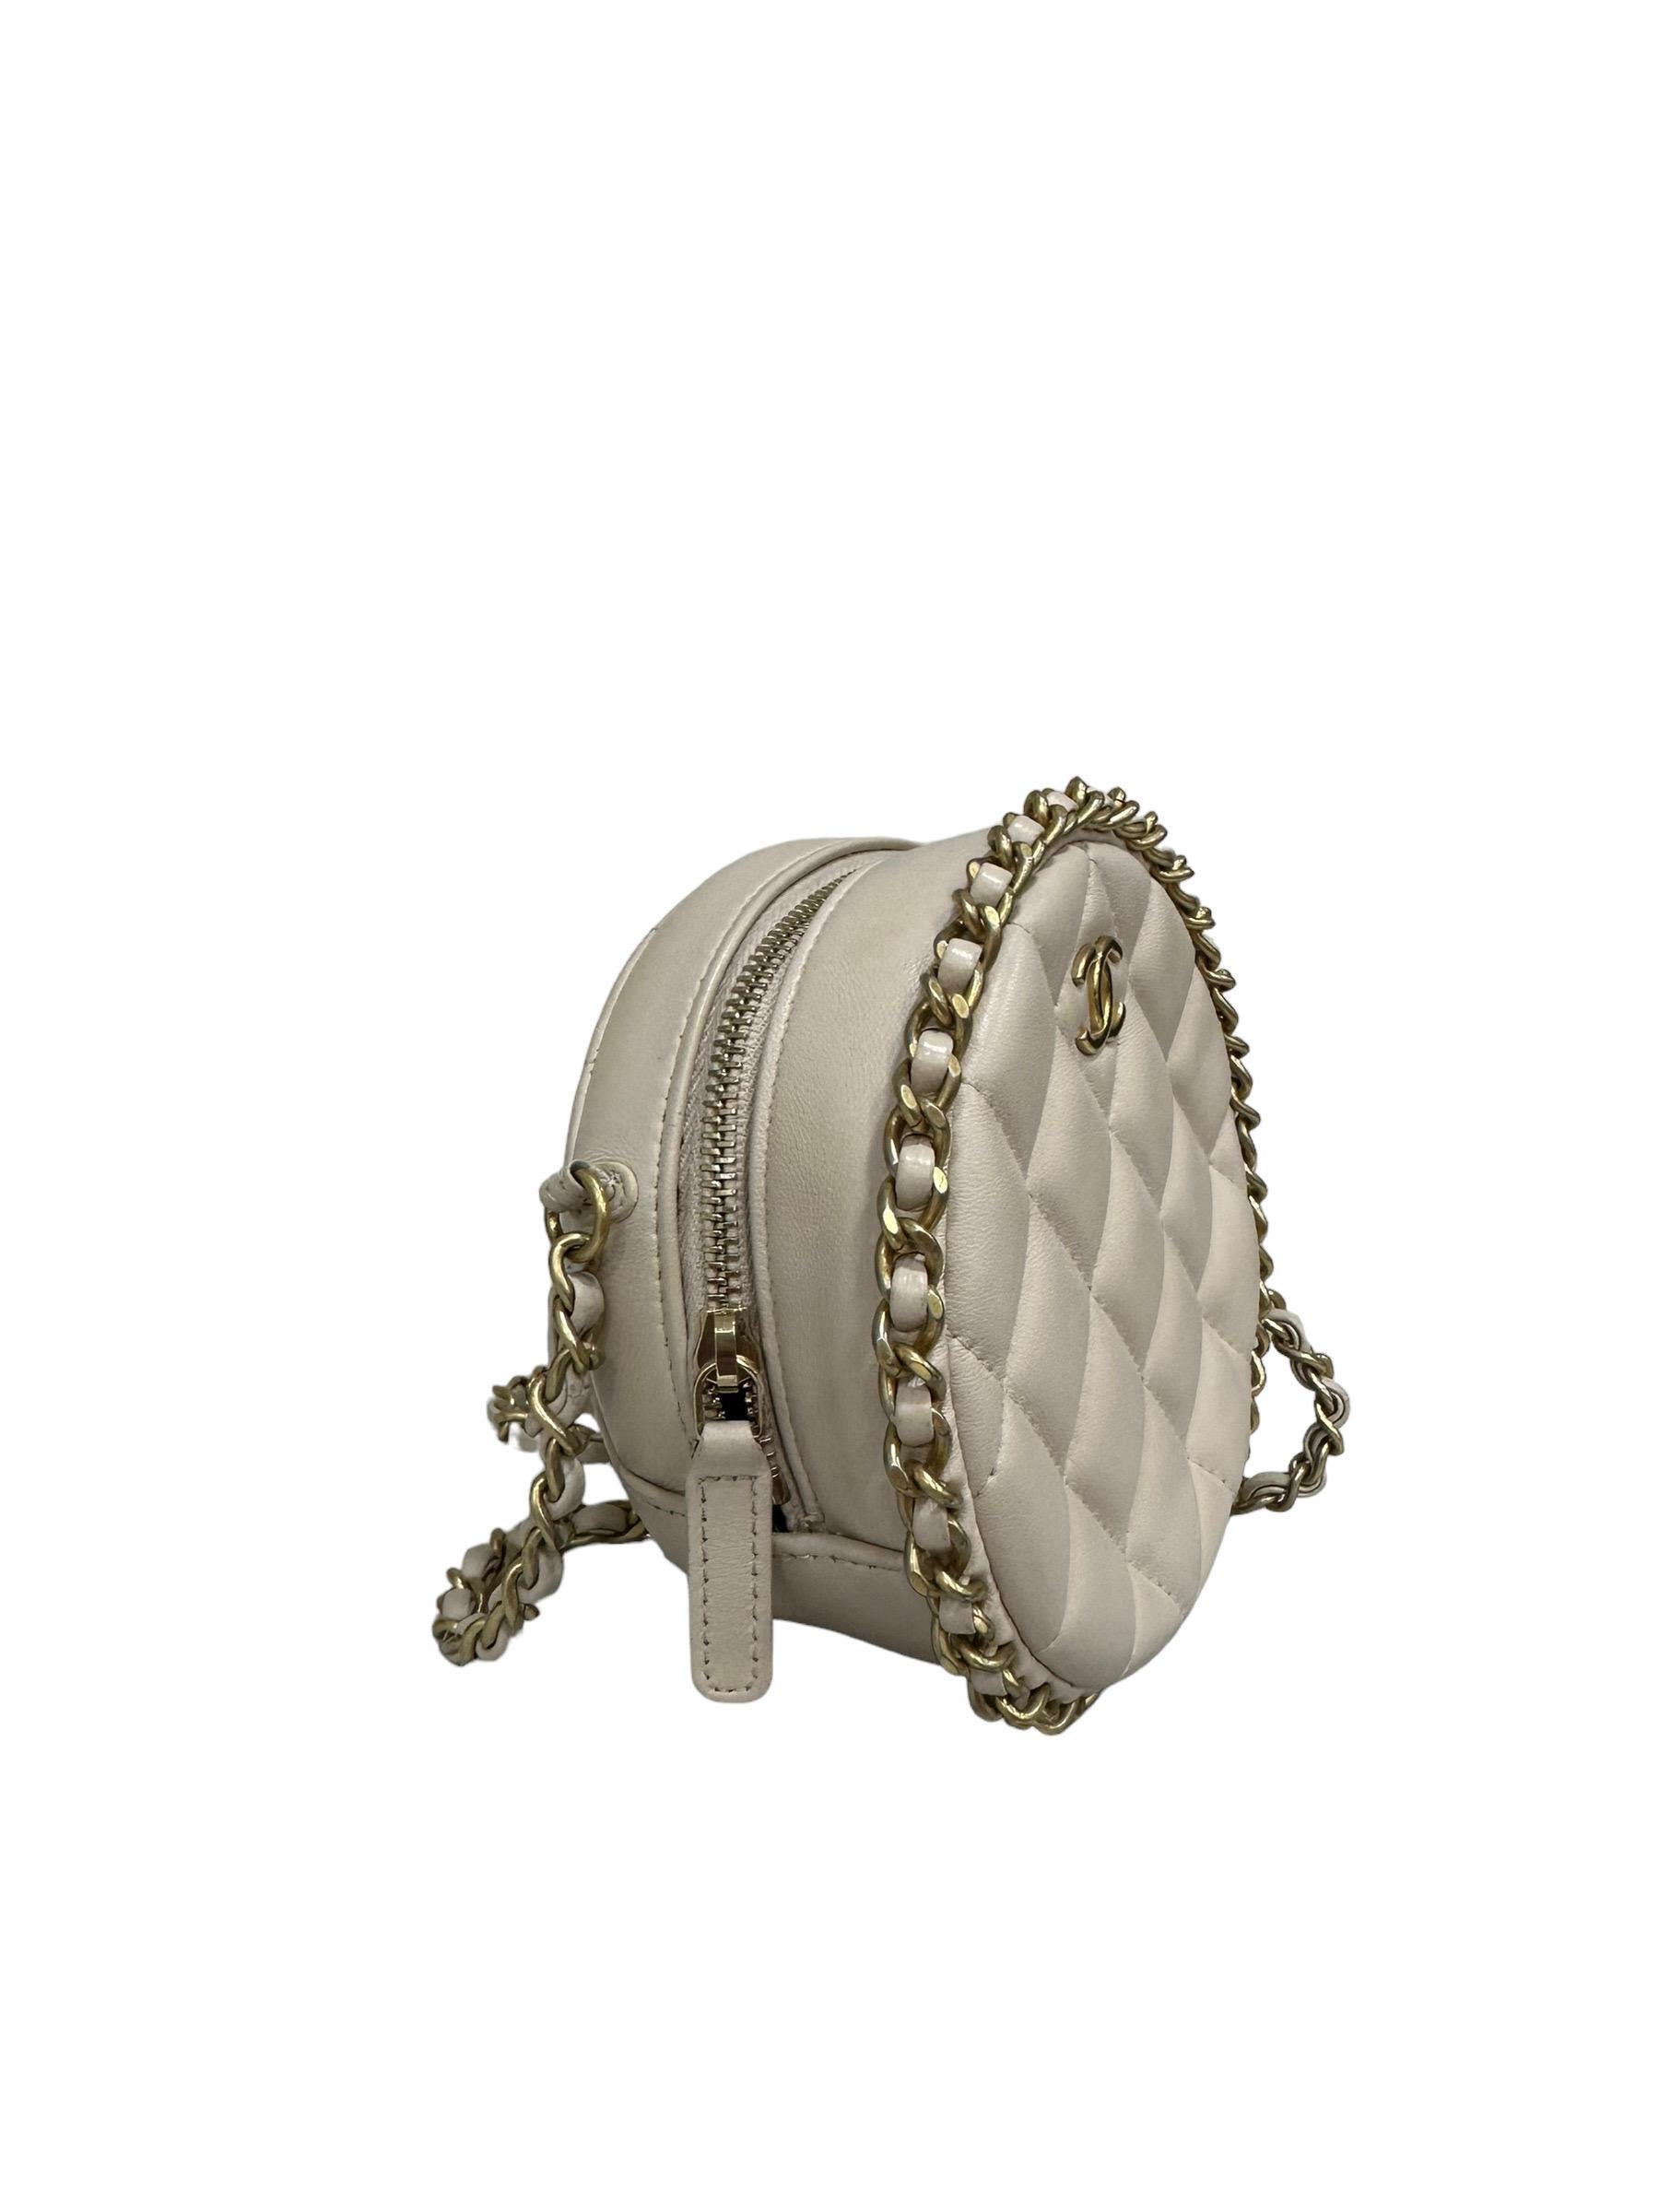 Borsa A Tracolla Chanel Round Bag Beige 2020 In Good Condition For Sale In Torre Del Greco, IT